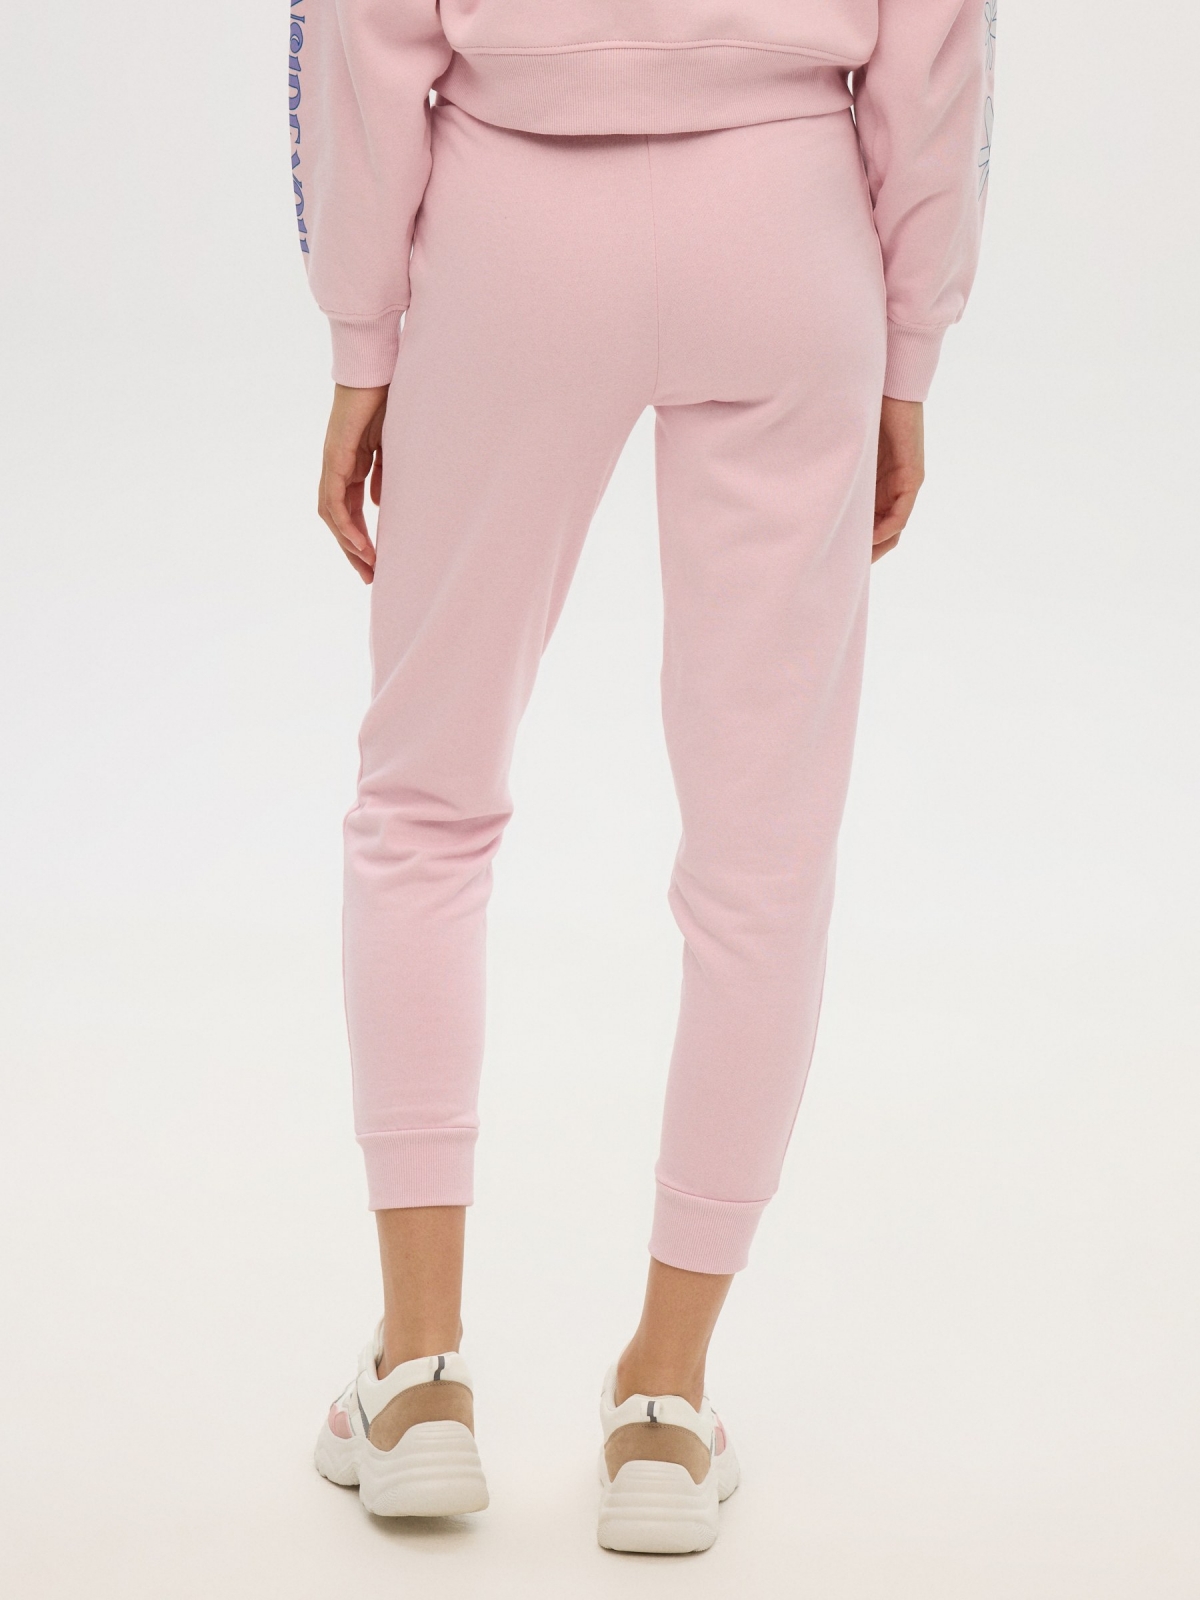 Pantalón jogger rosa estampado rosa claro vista media trasera